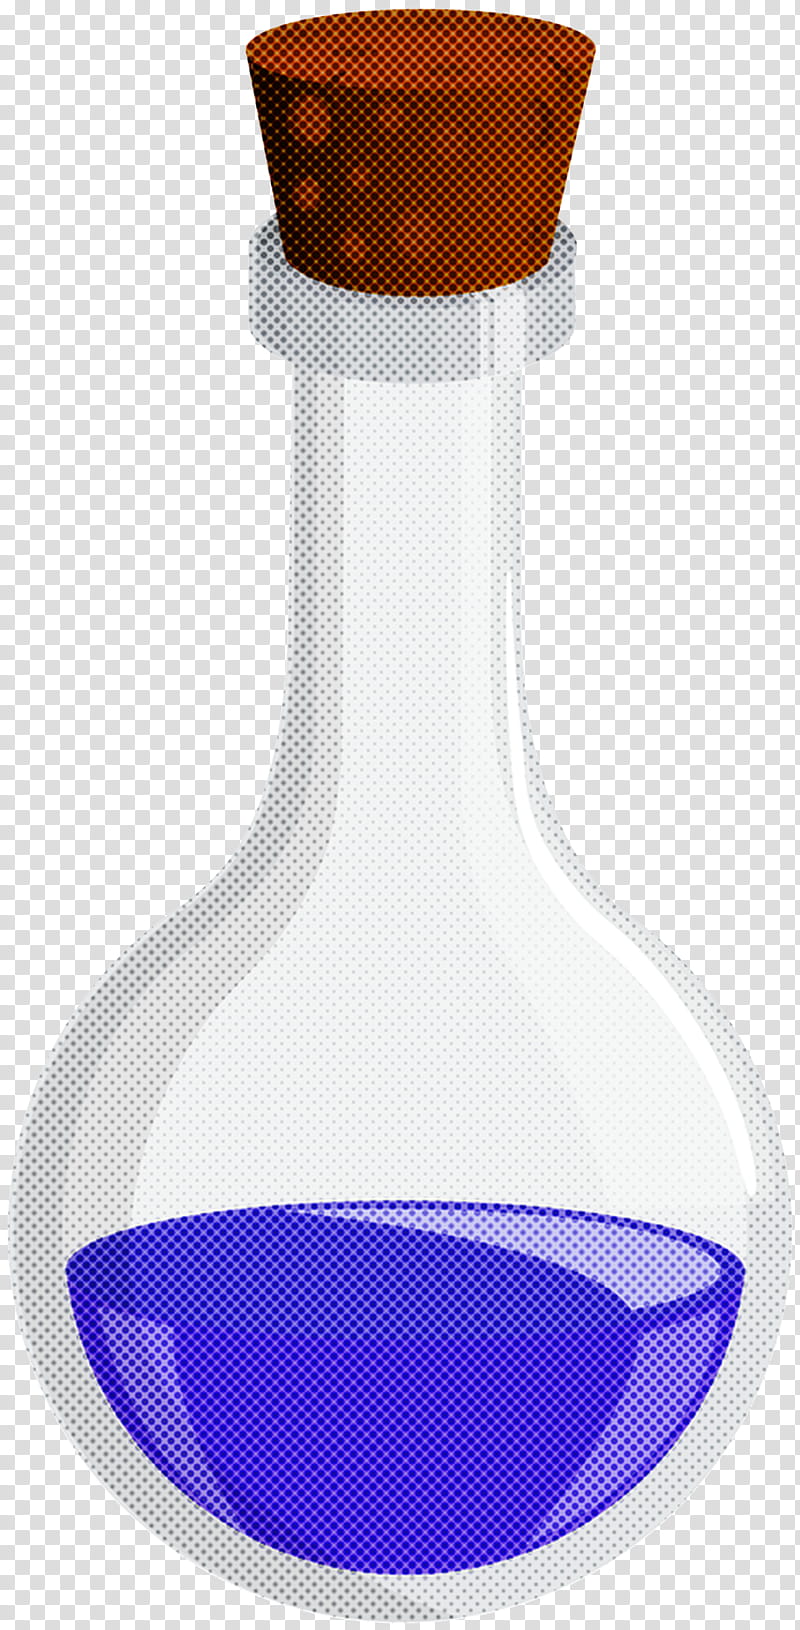 laboratory flask bottle flask glass bottle barware, Decanter transparent background PNG clipart